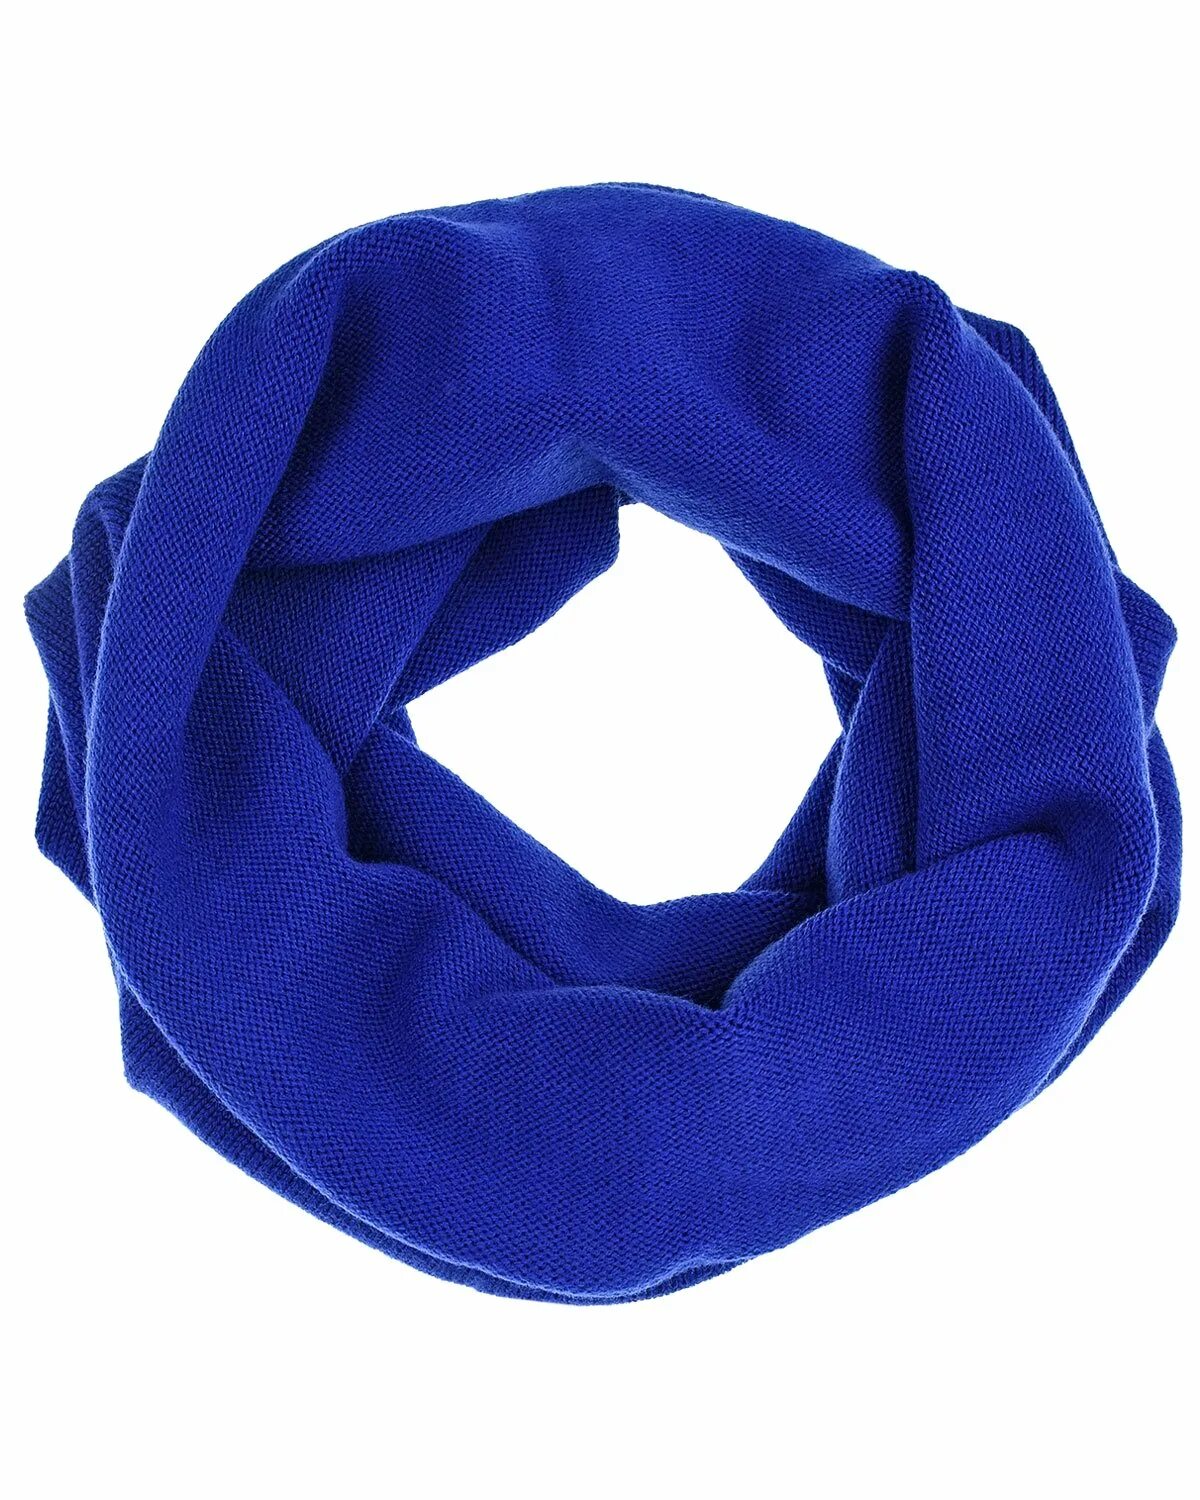 Шарф синий. Синий шарф с цветками 38749. Граммид синий шарф. Модный синий шарф Базиль 20127. Синий шарф купить